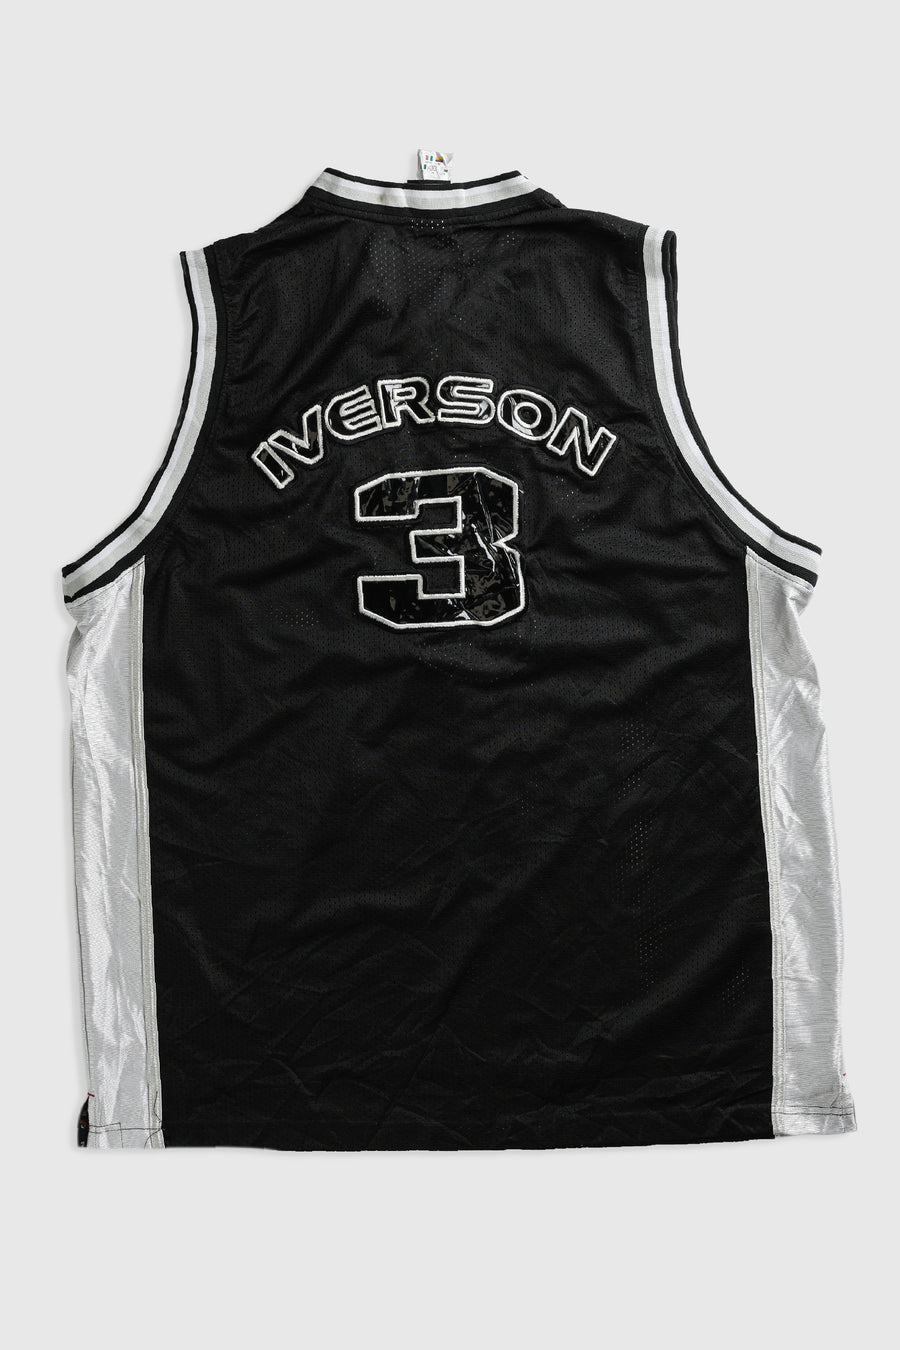 Vintage Iverson 3 Basketball Jersey